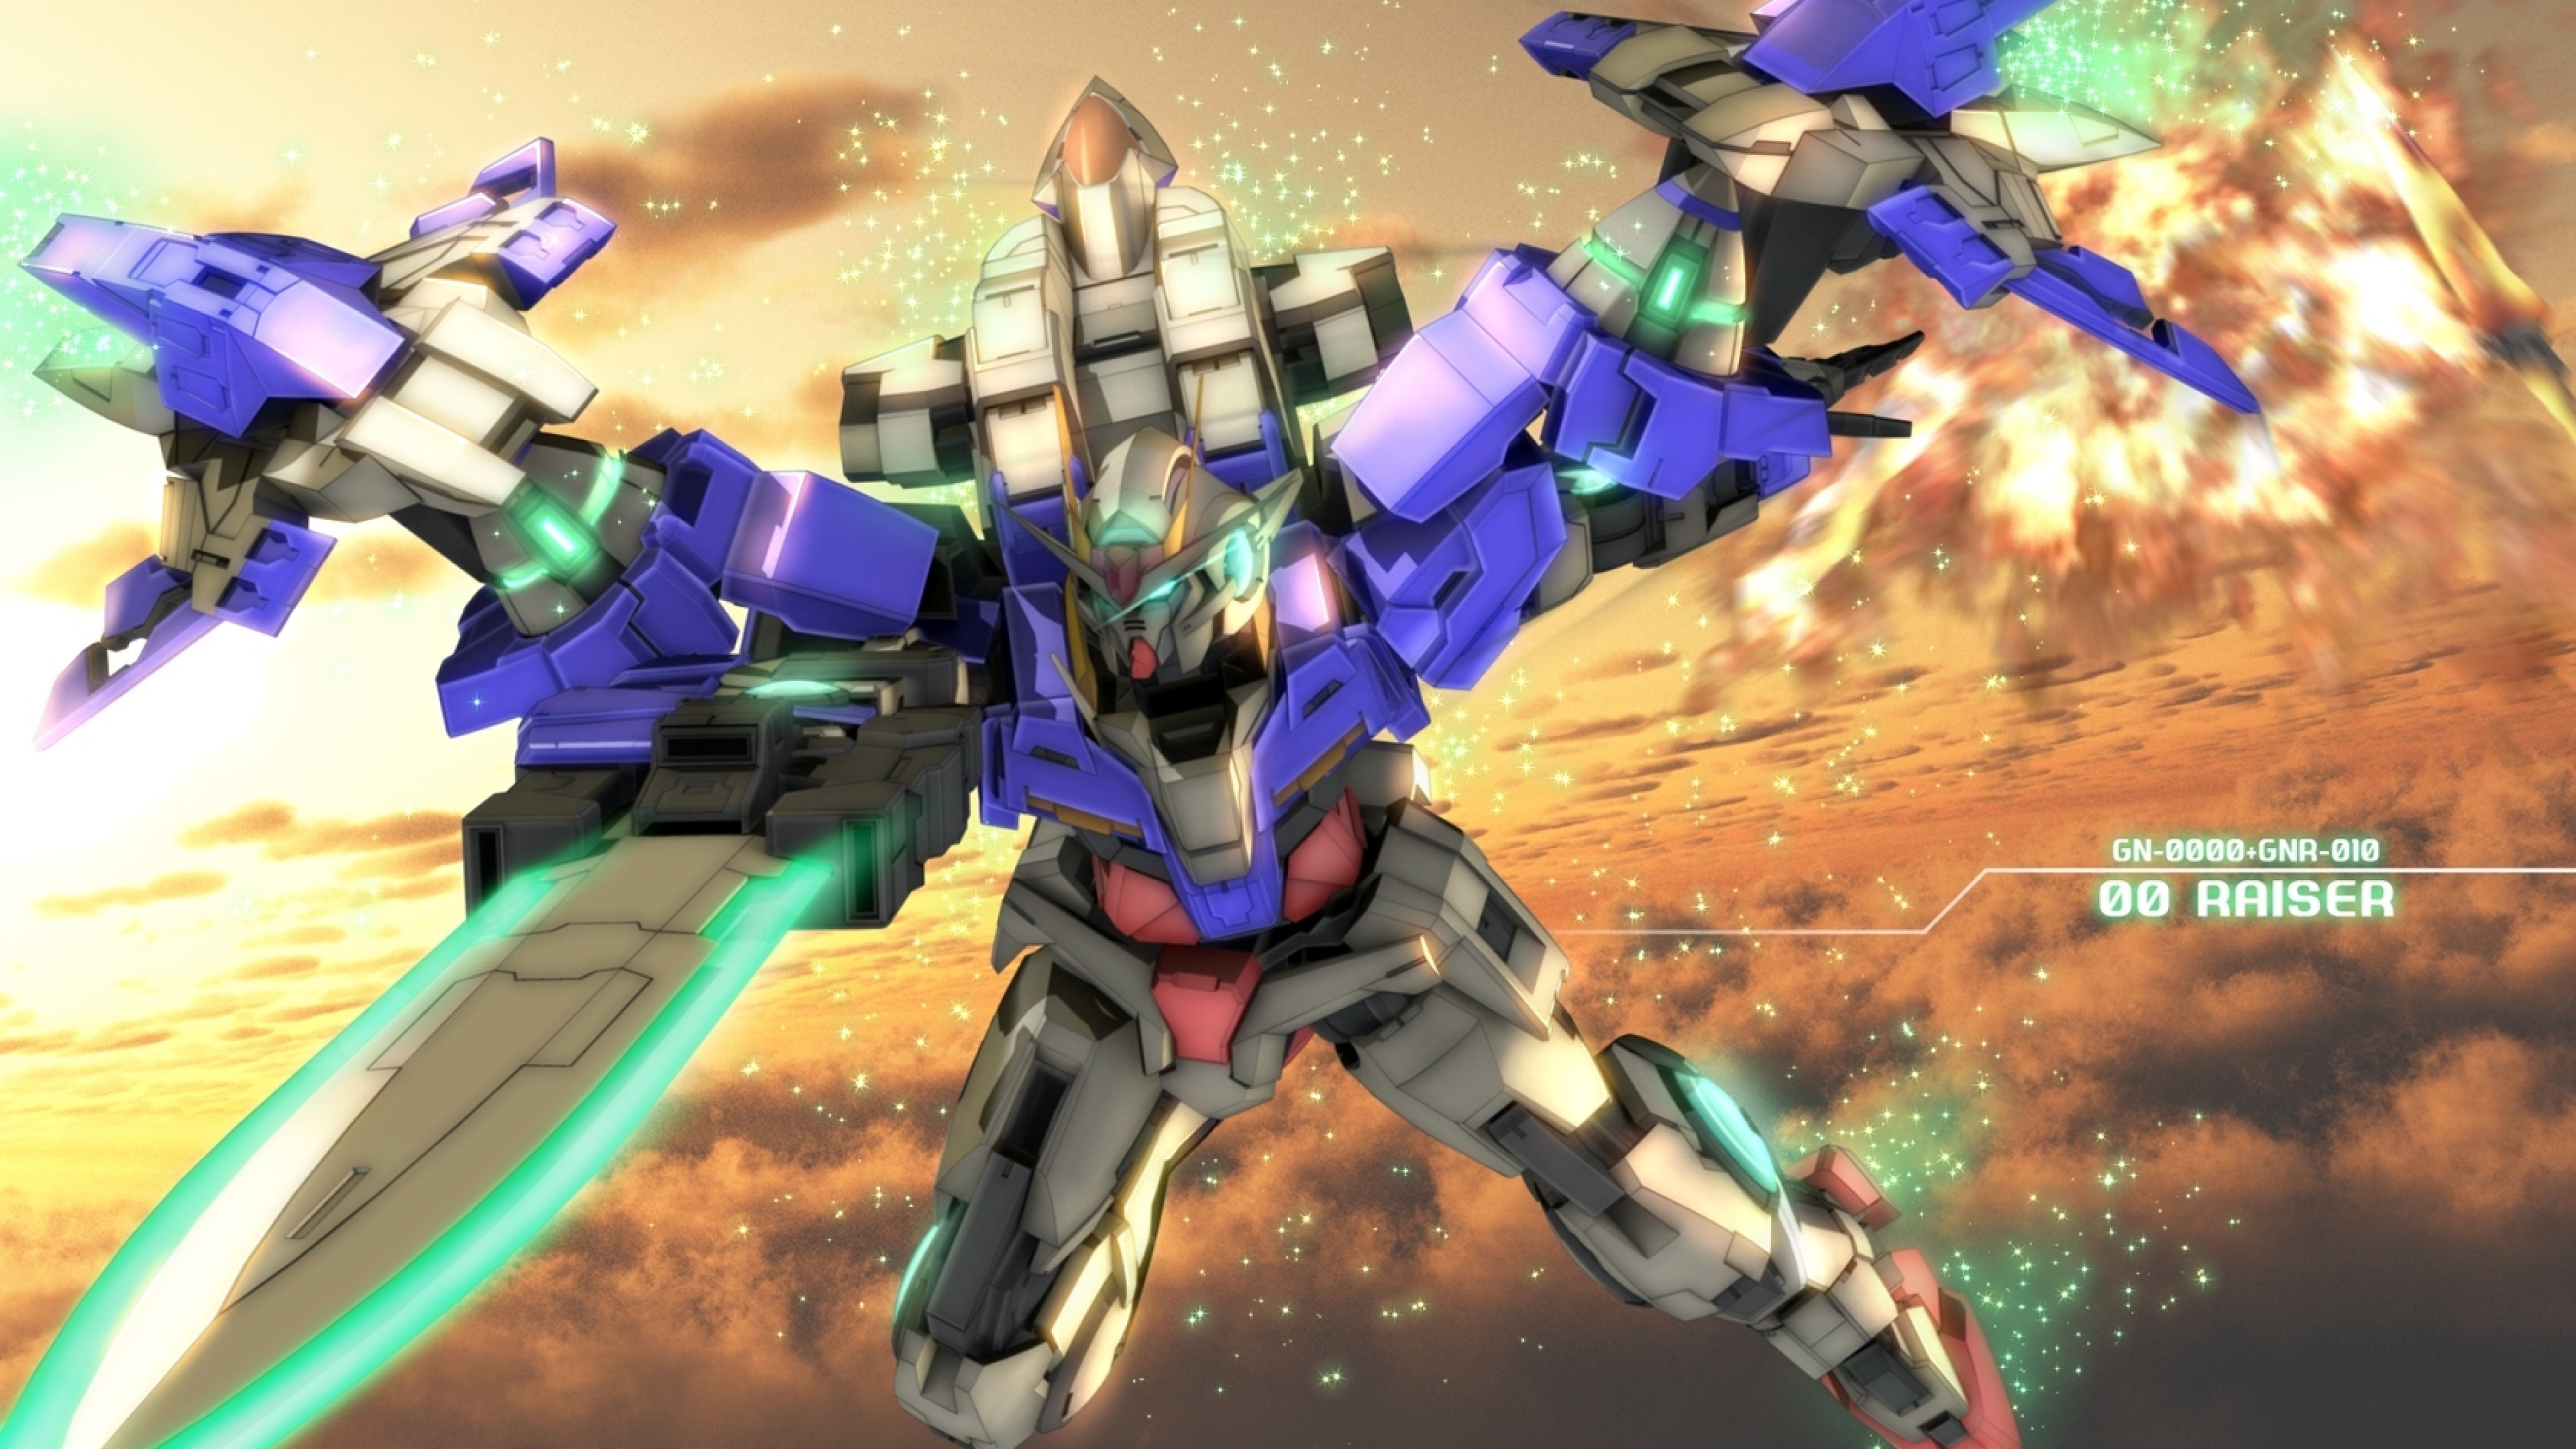 3840x2160 Mobile Suit Gundam, Mecha, Robot, 00 Raiser